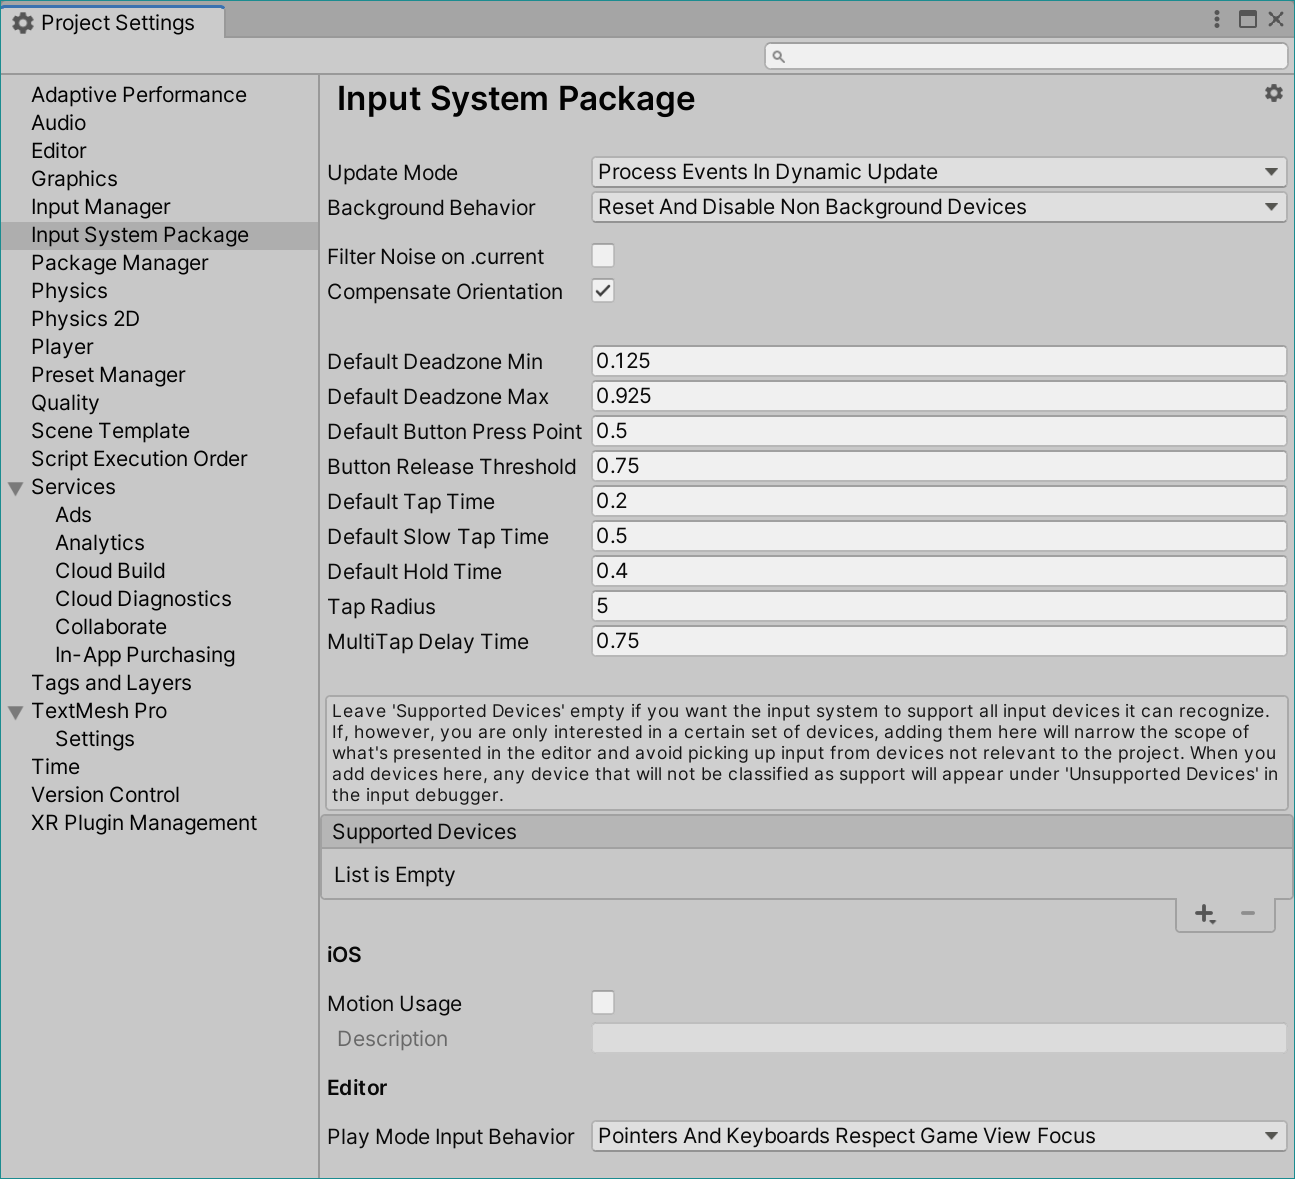 XBox controller input not working - Scripting Support - Developer